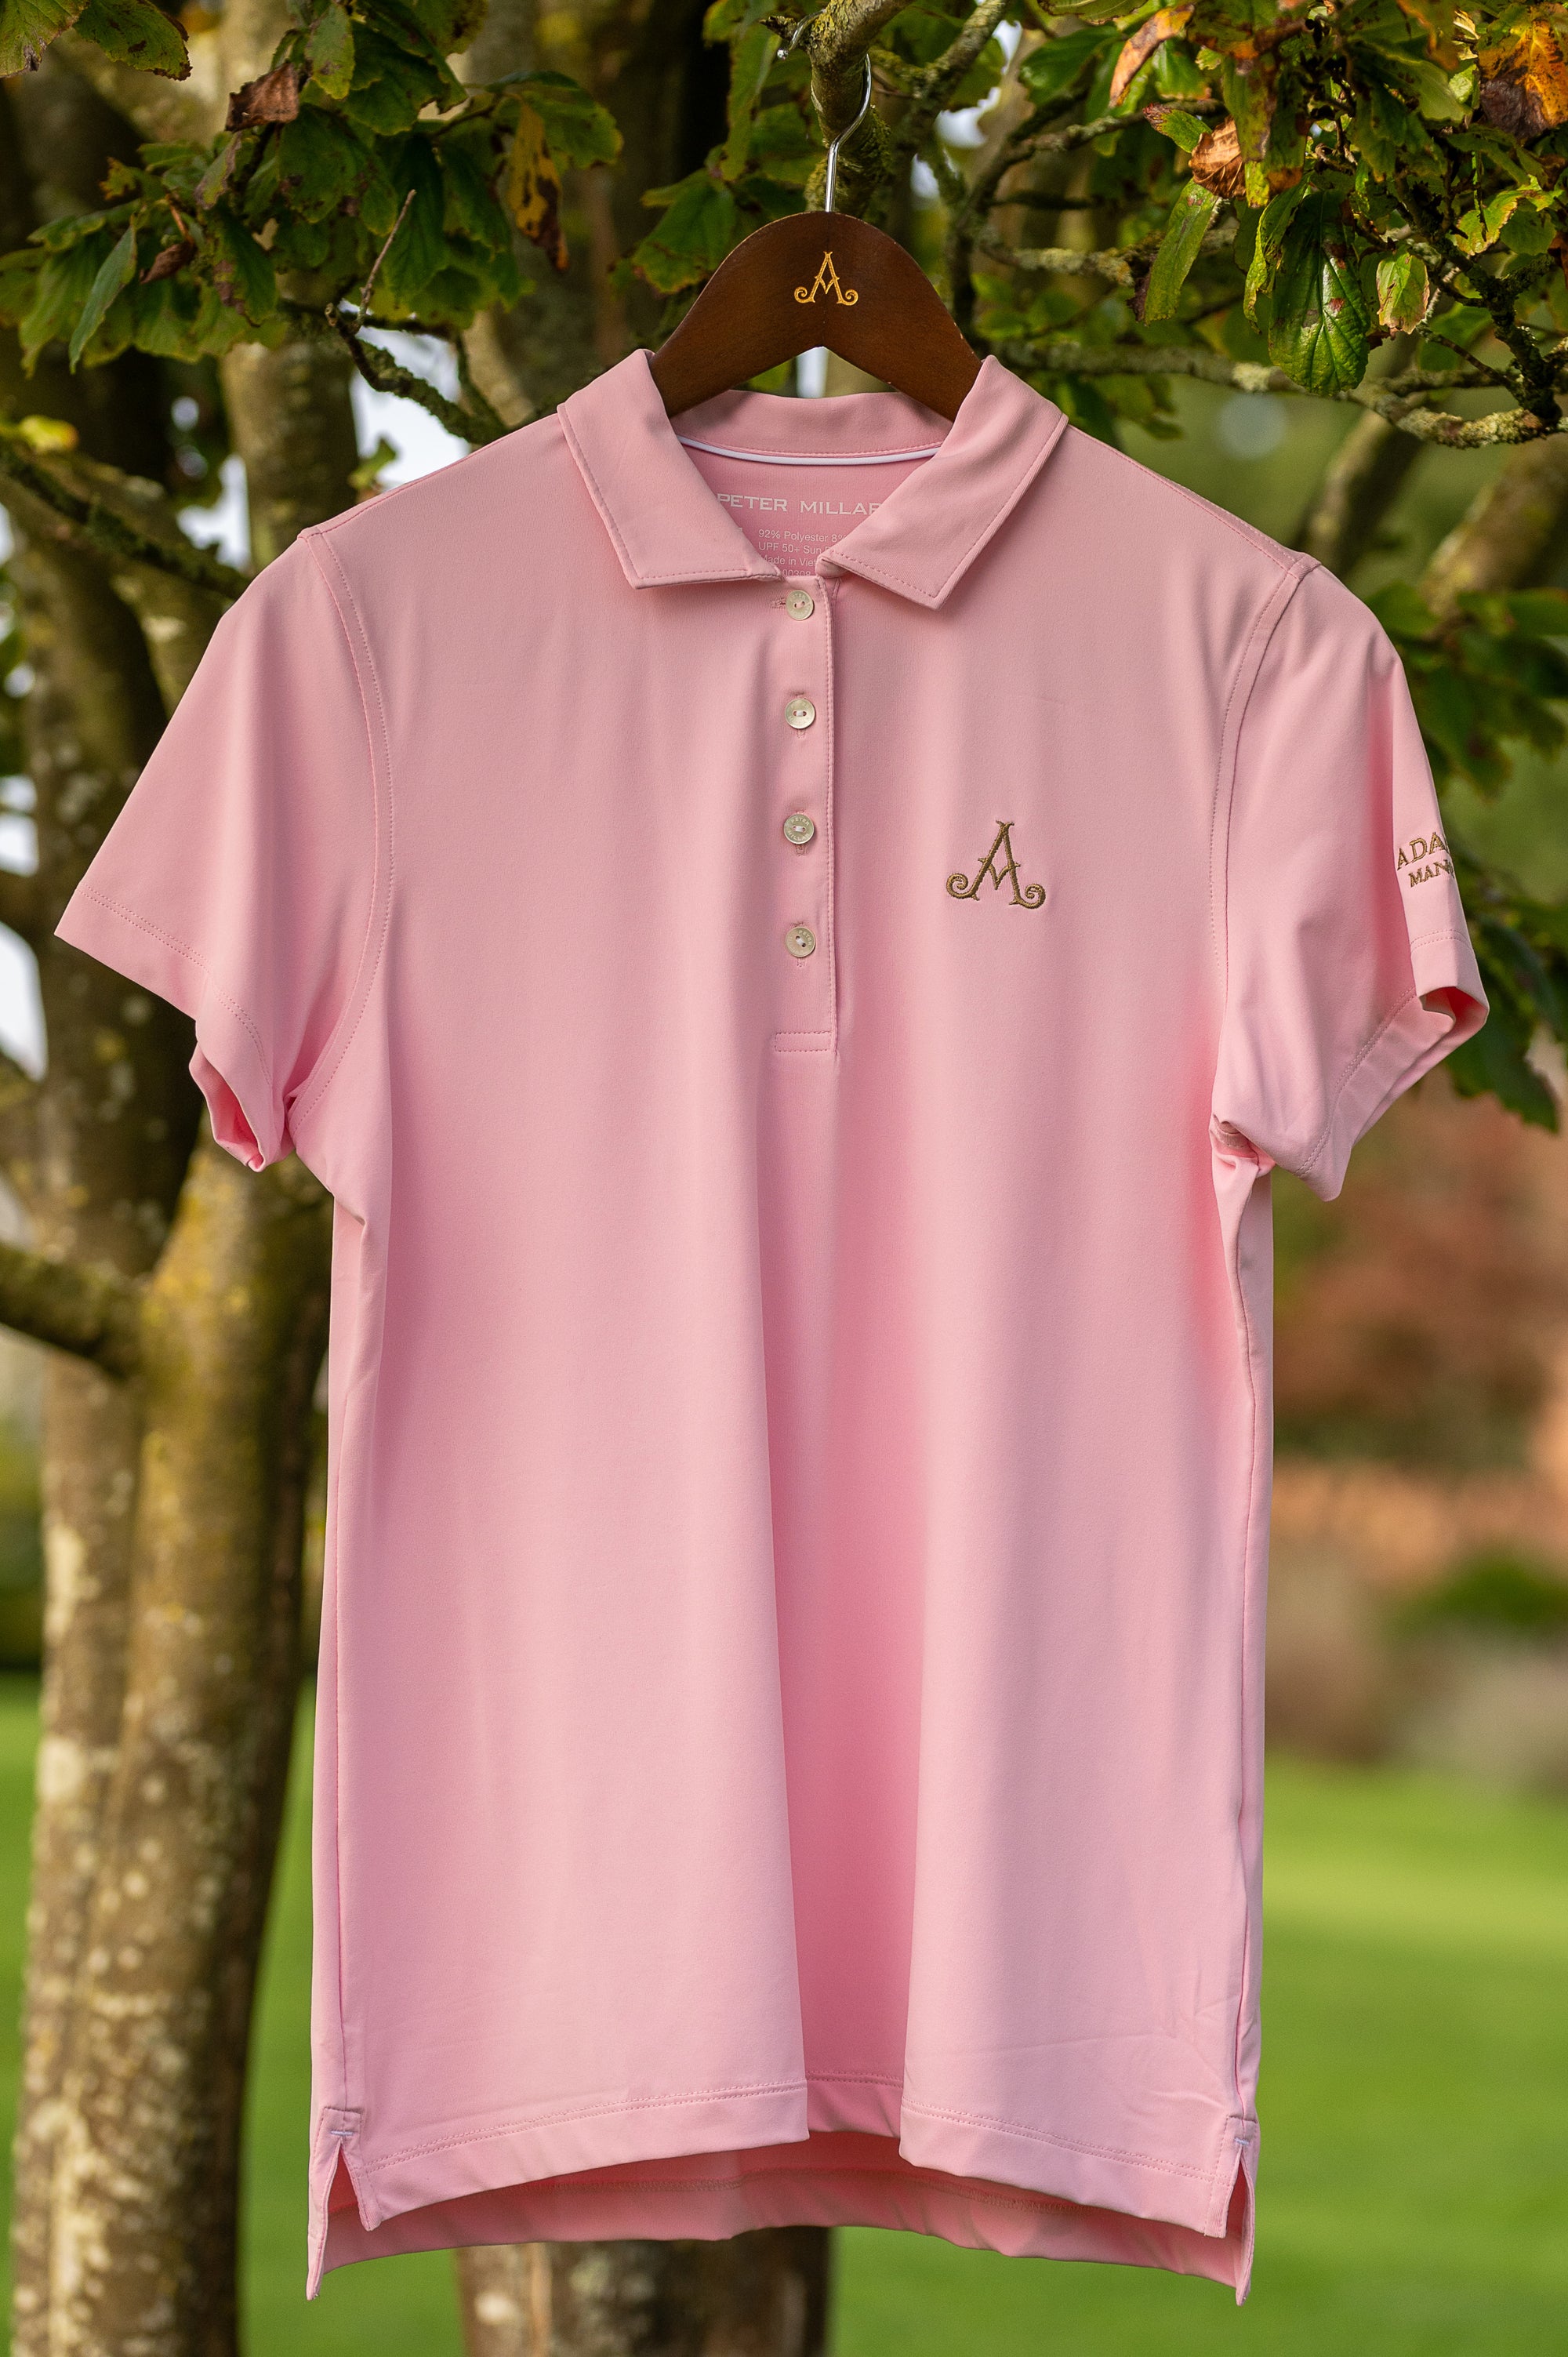 Adare Manor Ladies Pink Polo Shirt